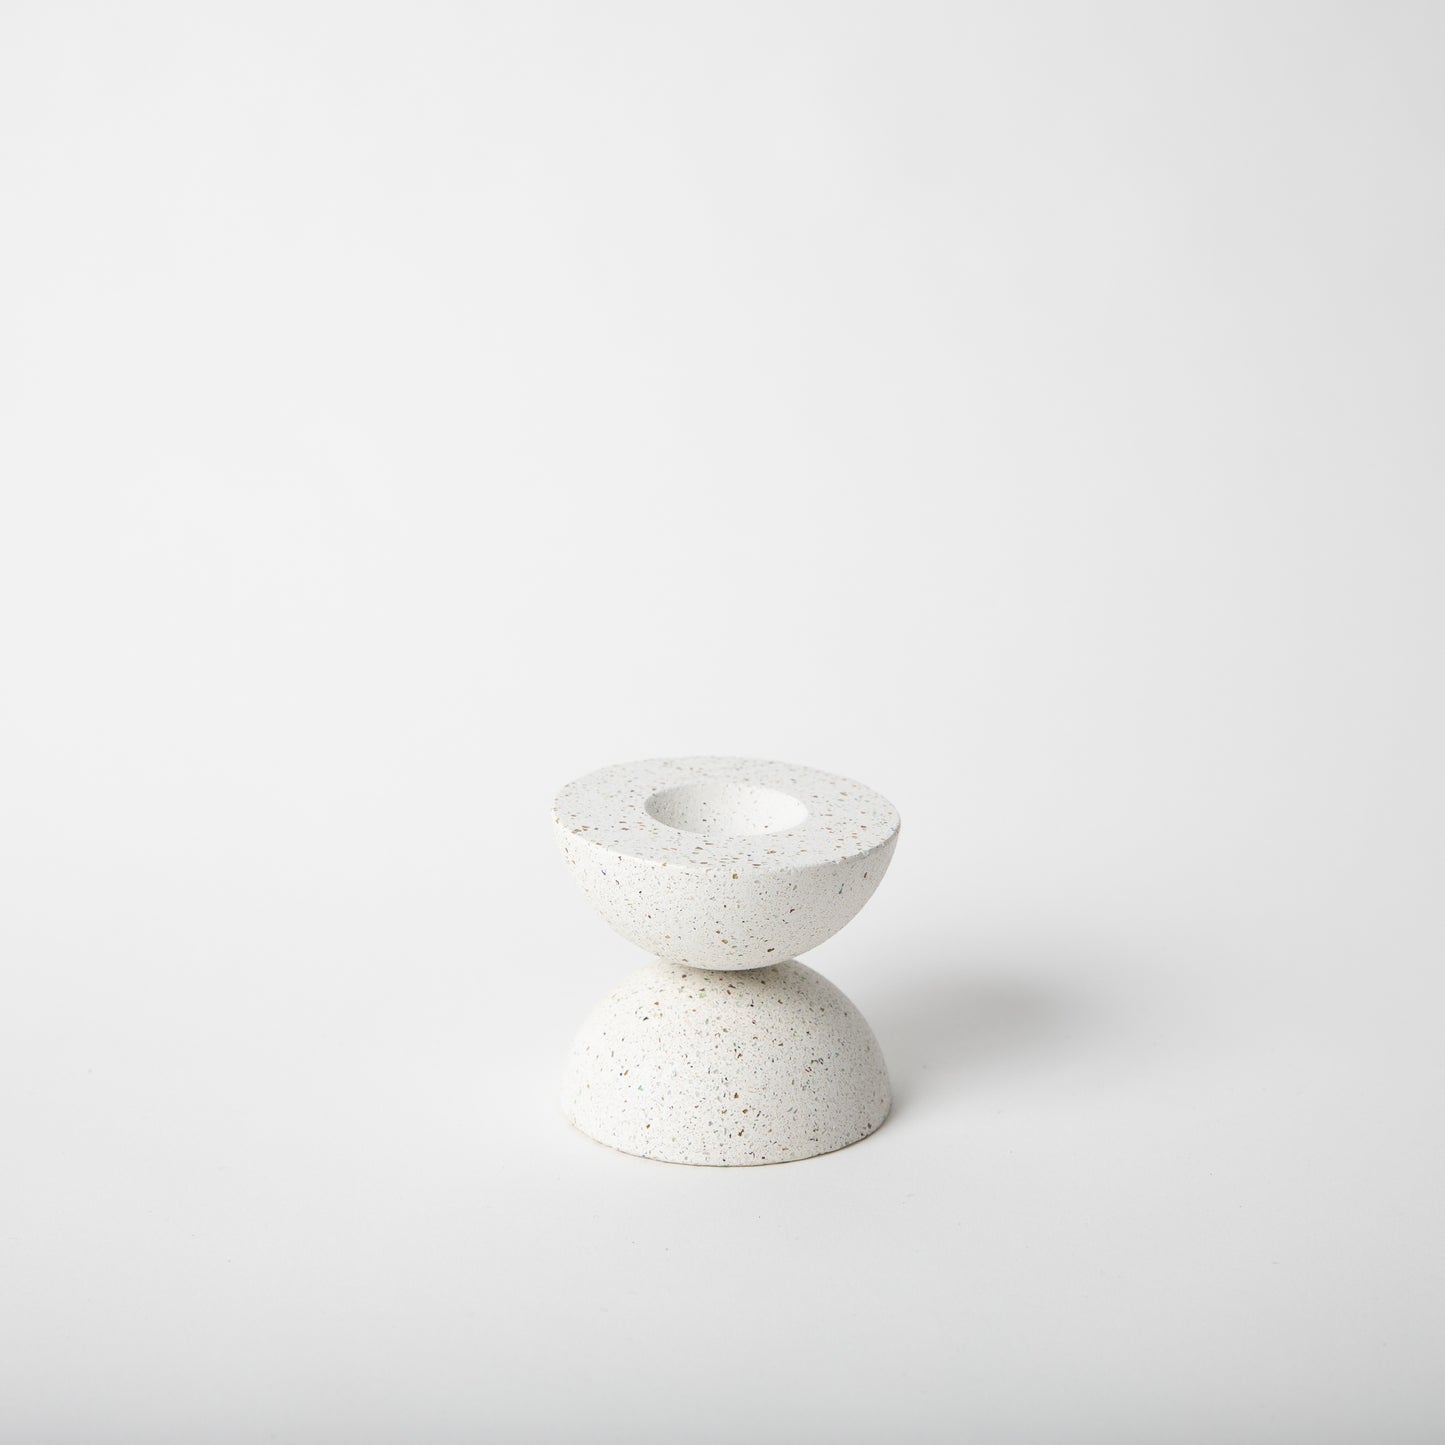 Half sphere shaped incense holder in white terrazzo.